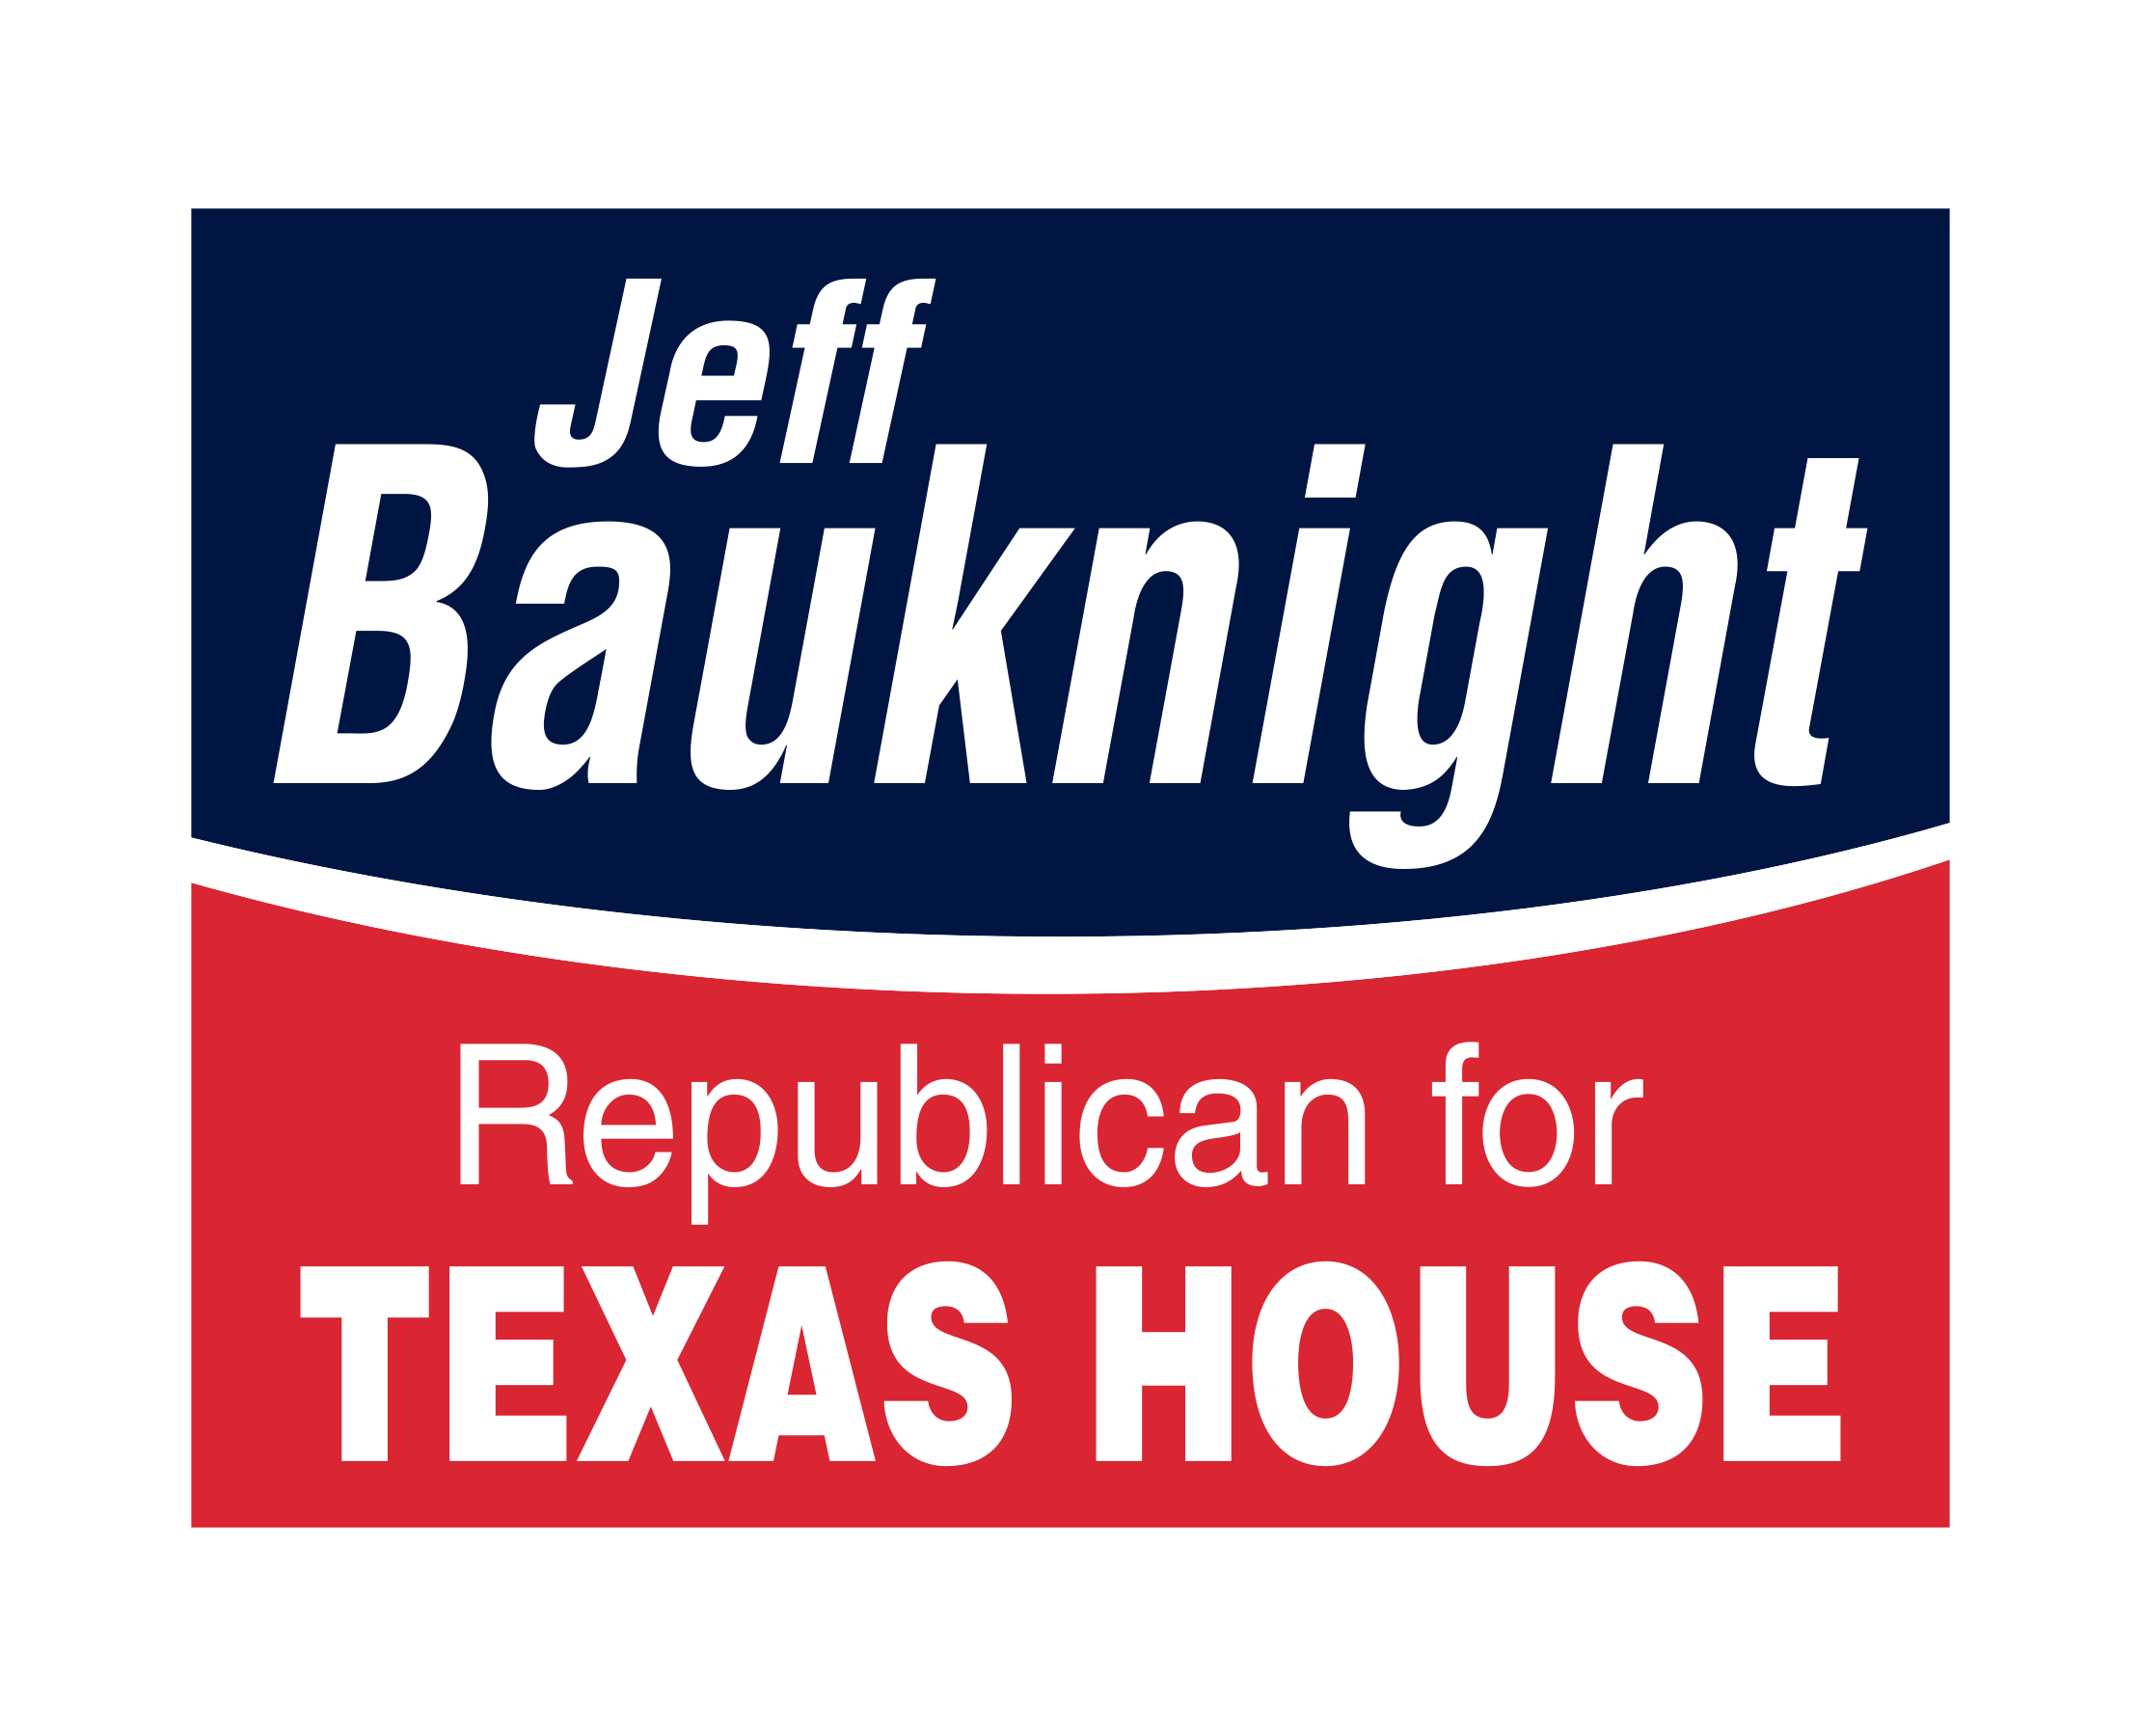 Jeff Bauknight for Texas